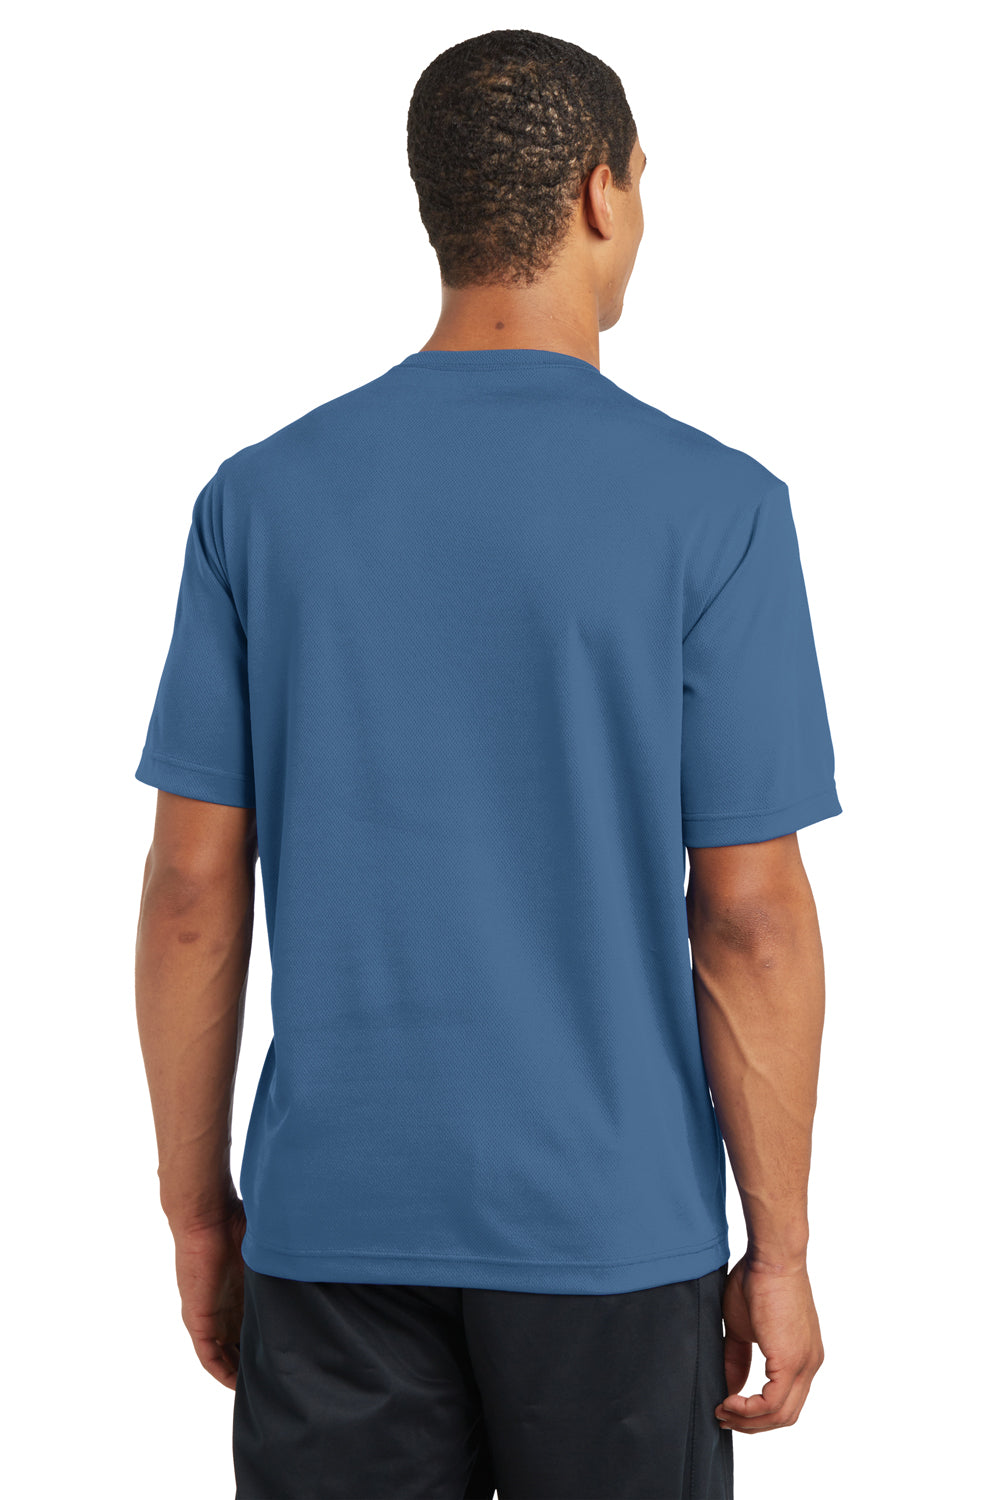 Sport-Tek ST340 Mens RacerMesh Moisture Wicking Short Sleeve Crewneck T-Shirt Dawn Blue Back